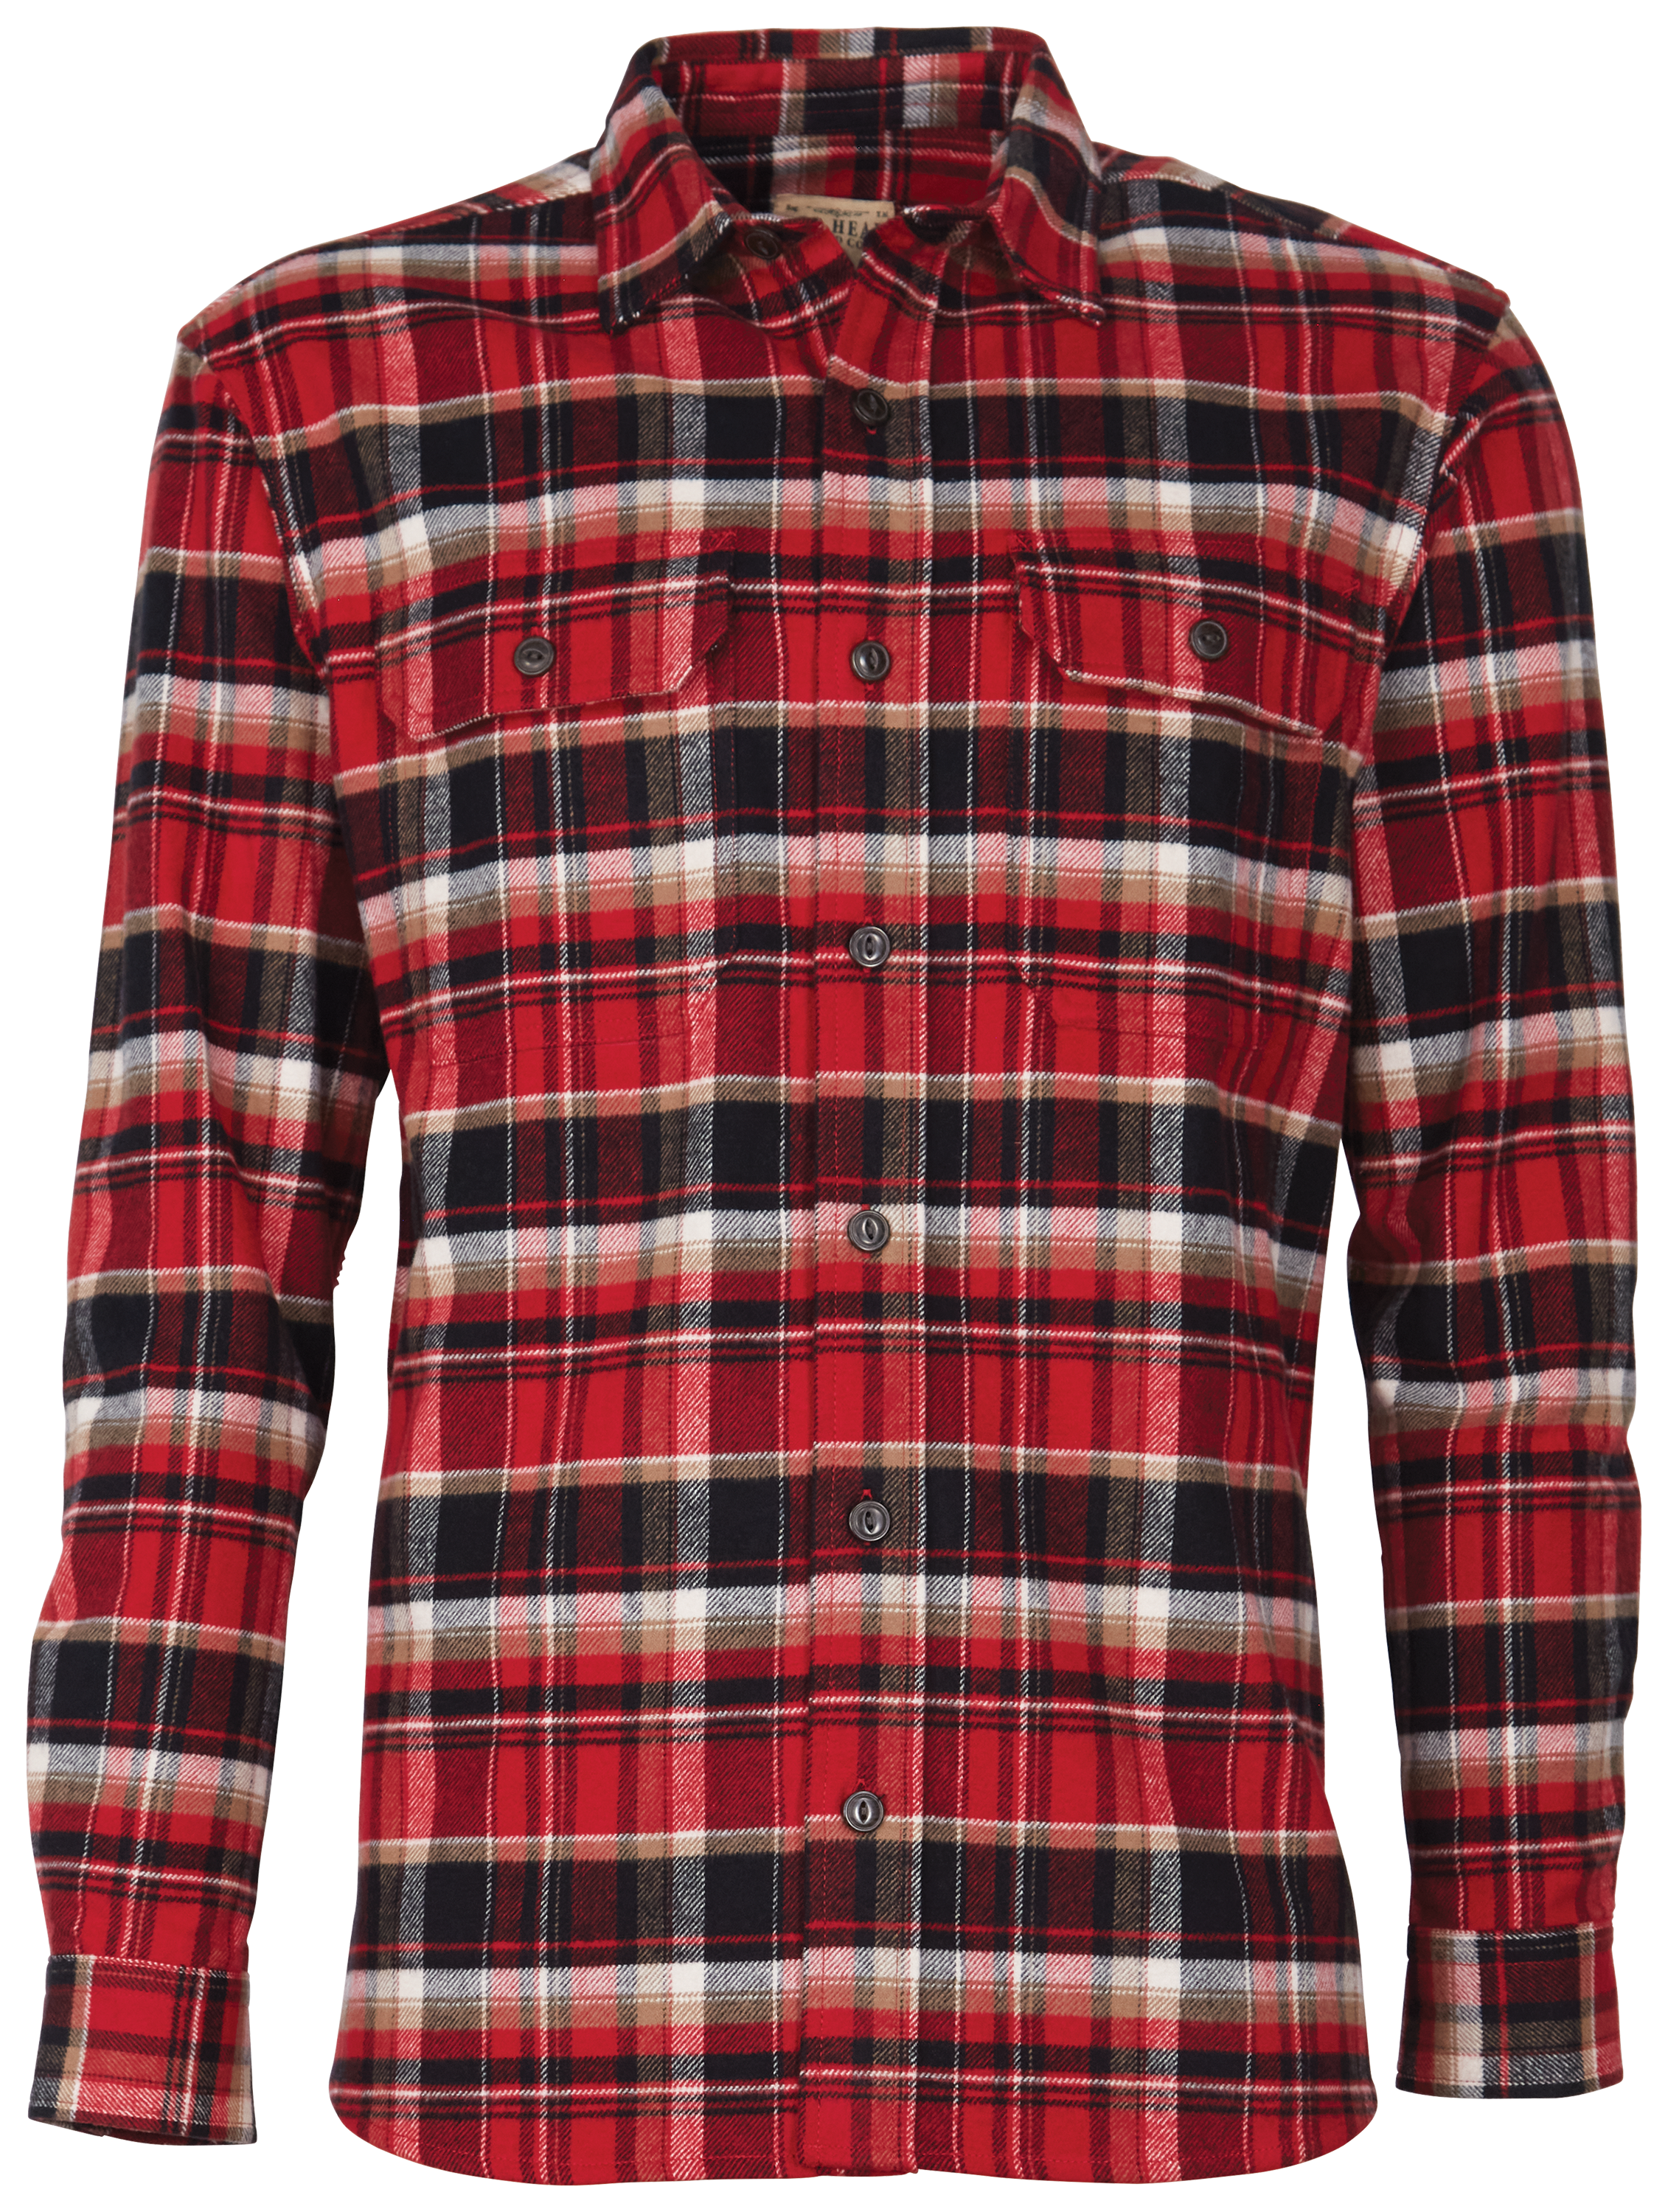 Redhead Brawny Flannel Long-Sleeve Shirt for Men - Oatmeal Brown - 3XL